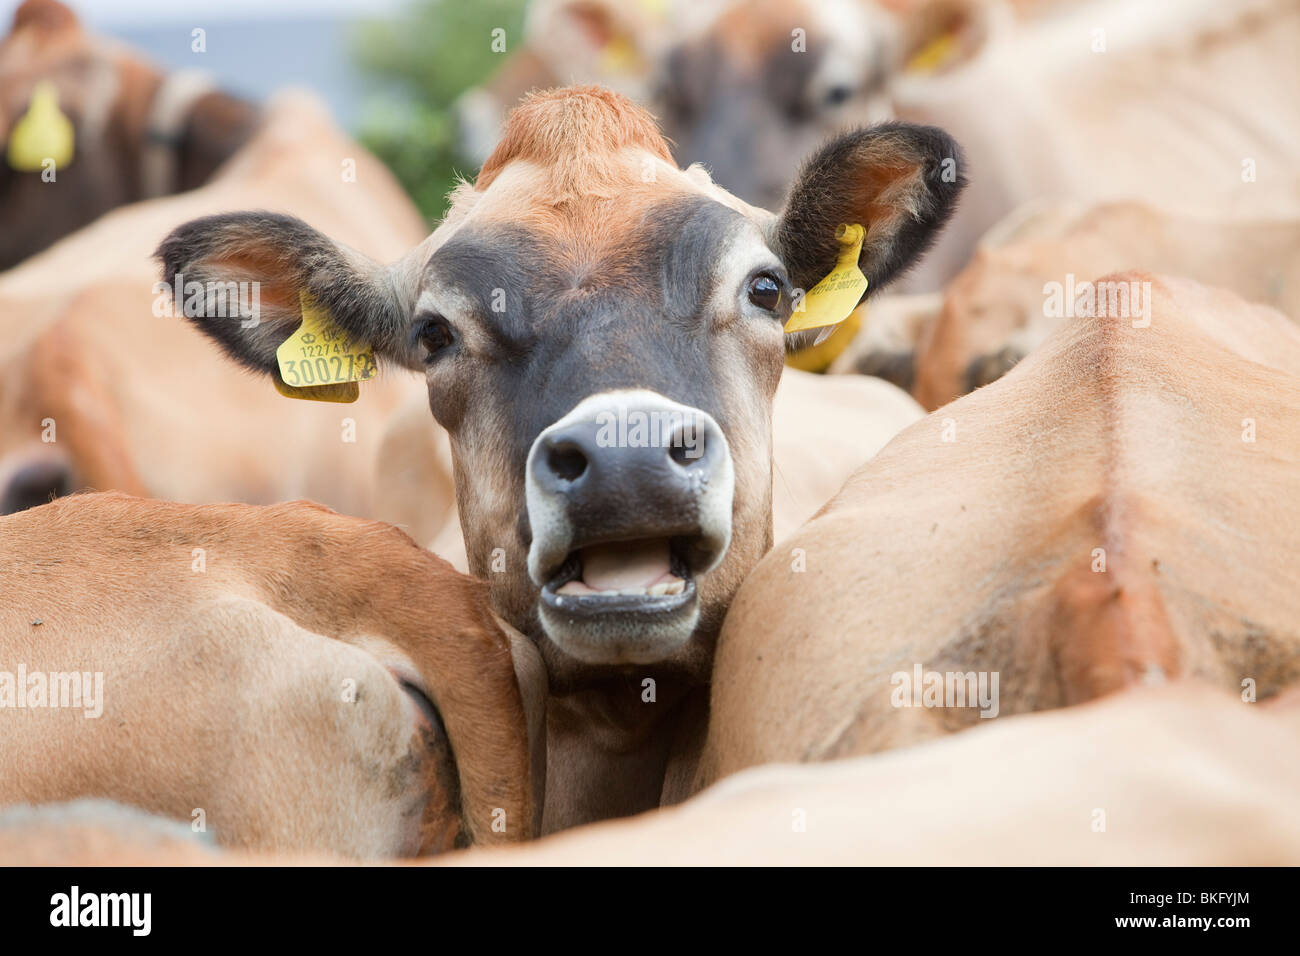 Jersey cows on a farm in the Yorkshire Dales near Bainbridge, UK. Stock Photo